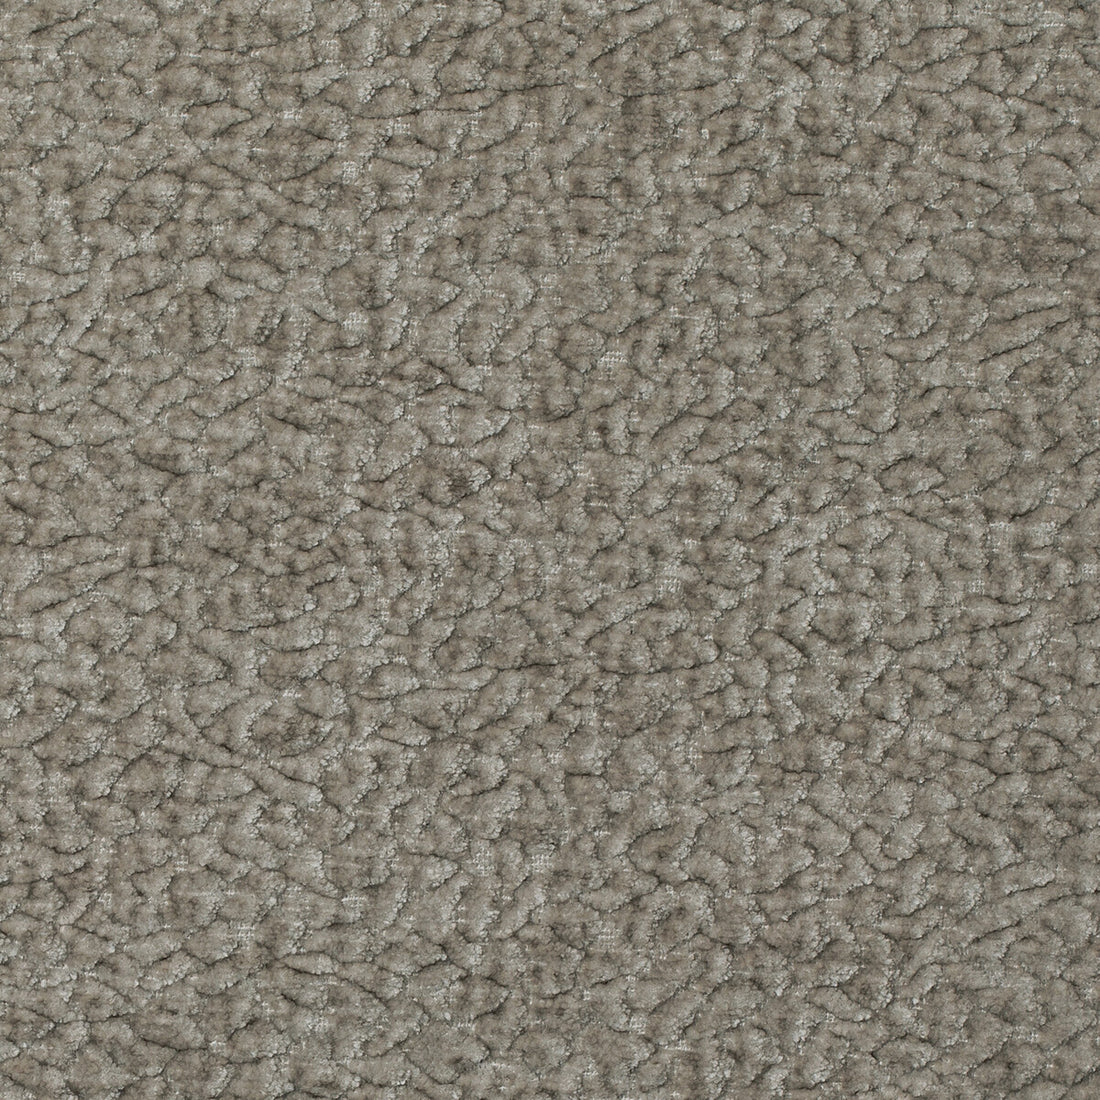 Barton Chenille fabric in zen color - pattern 36074.1611.0 - by Kravet Smart